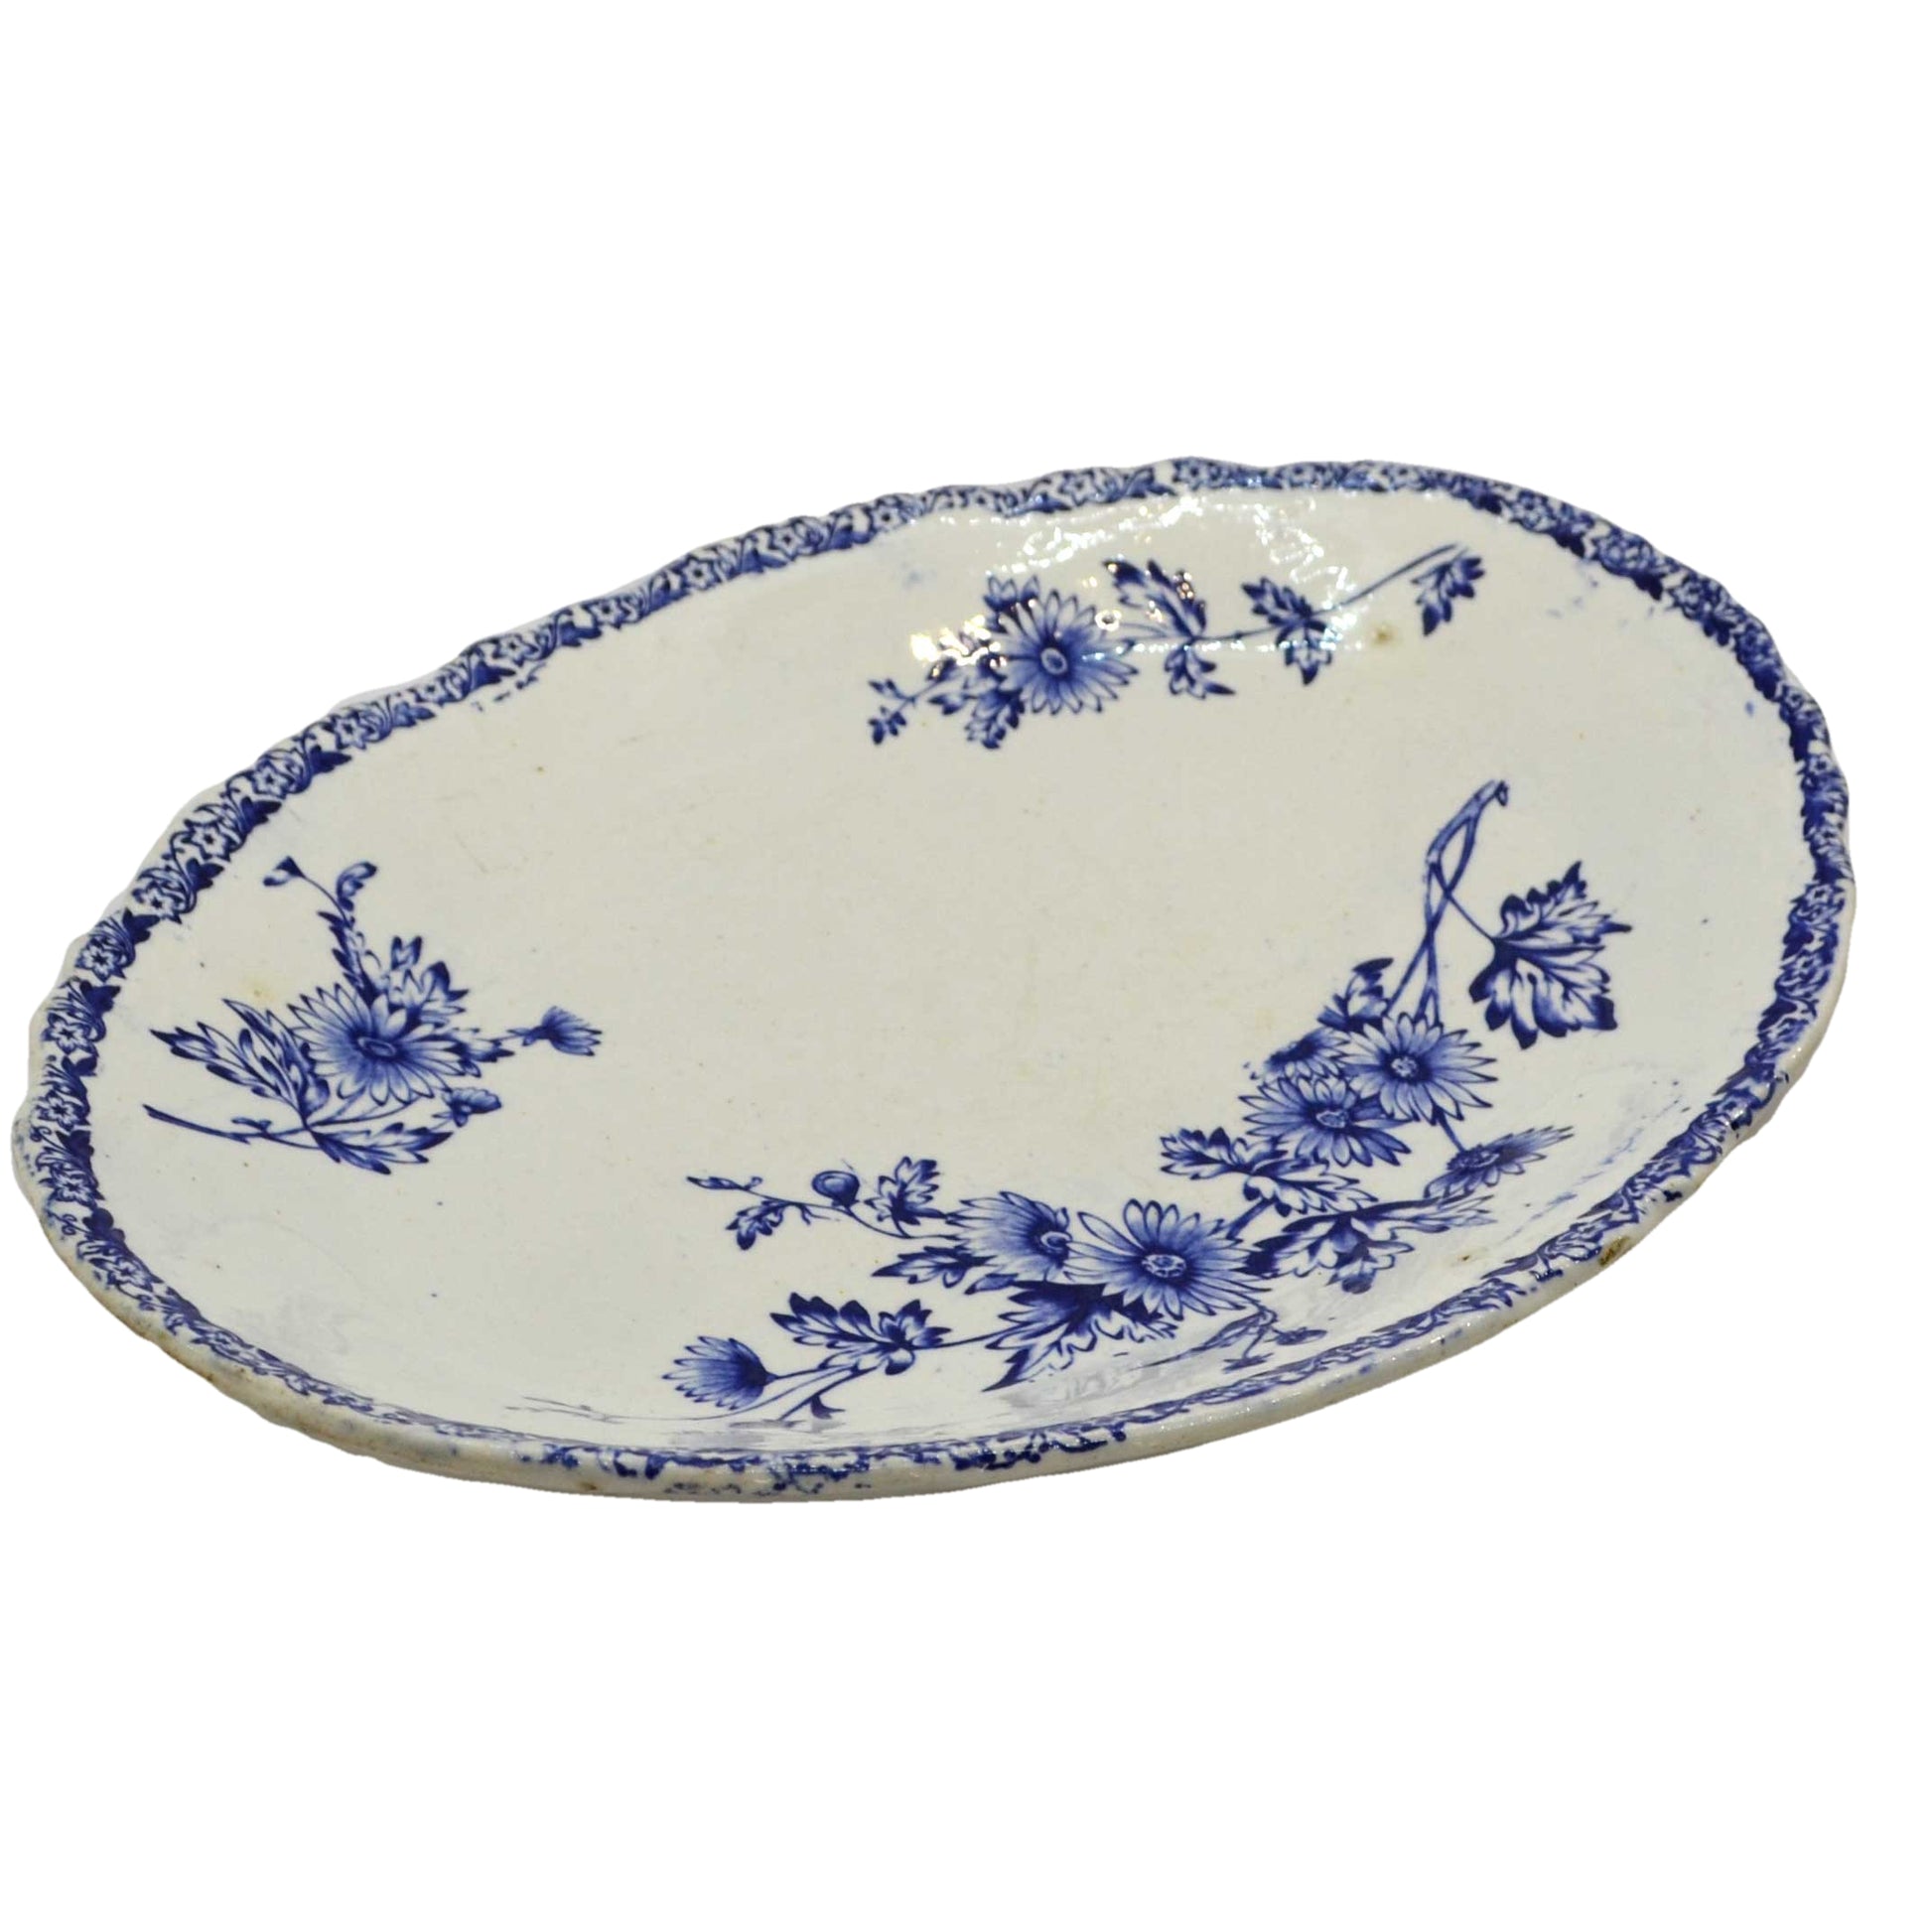 c1960 blue and white staffordshire china platter